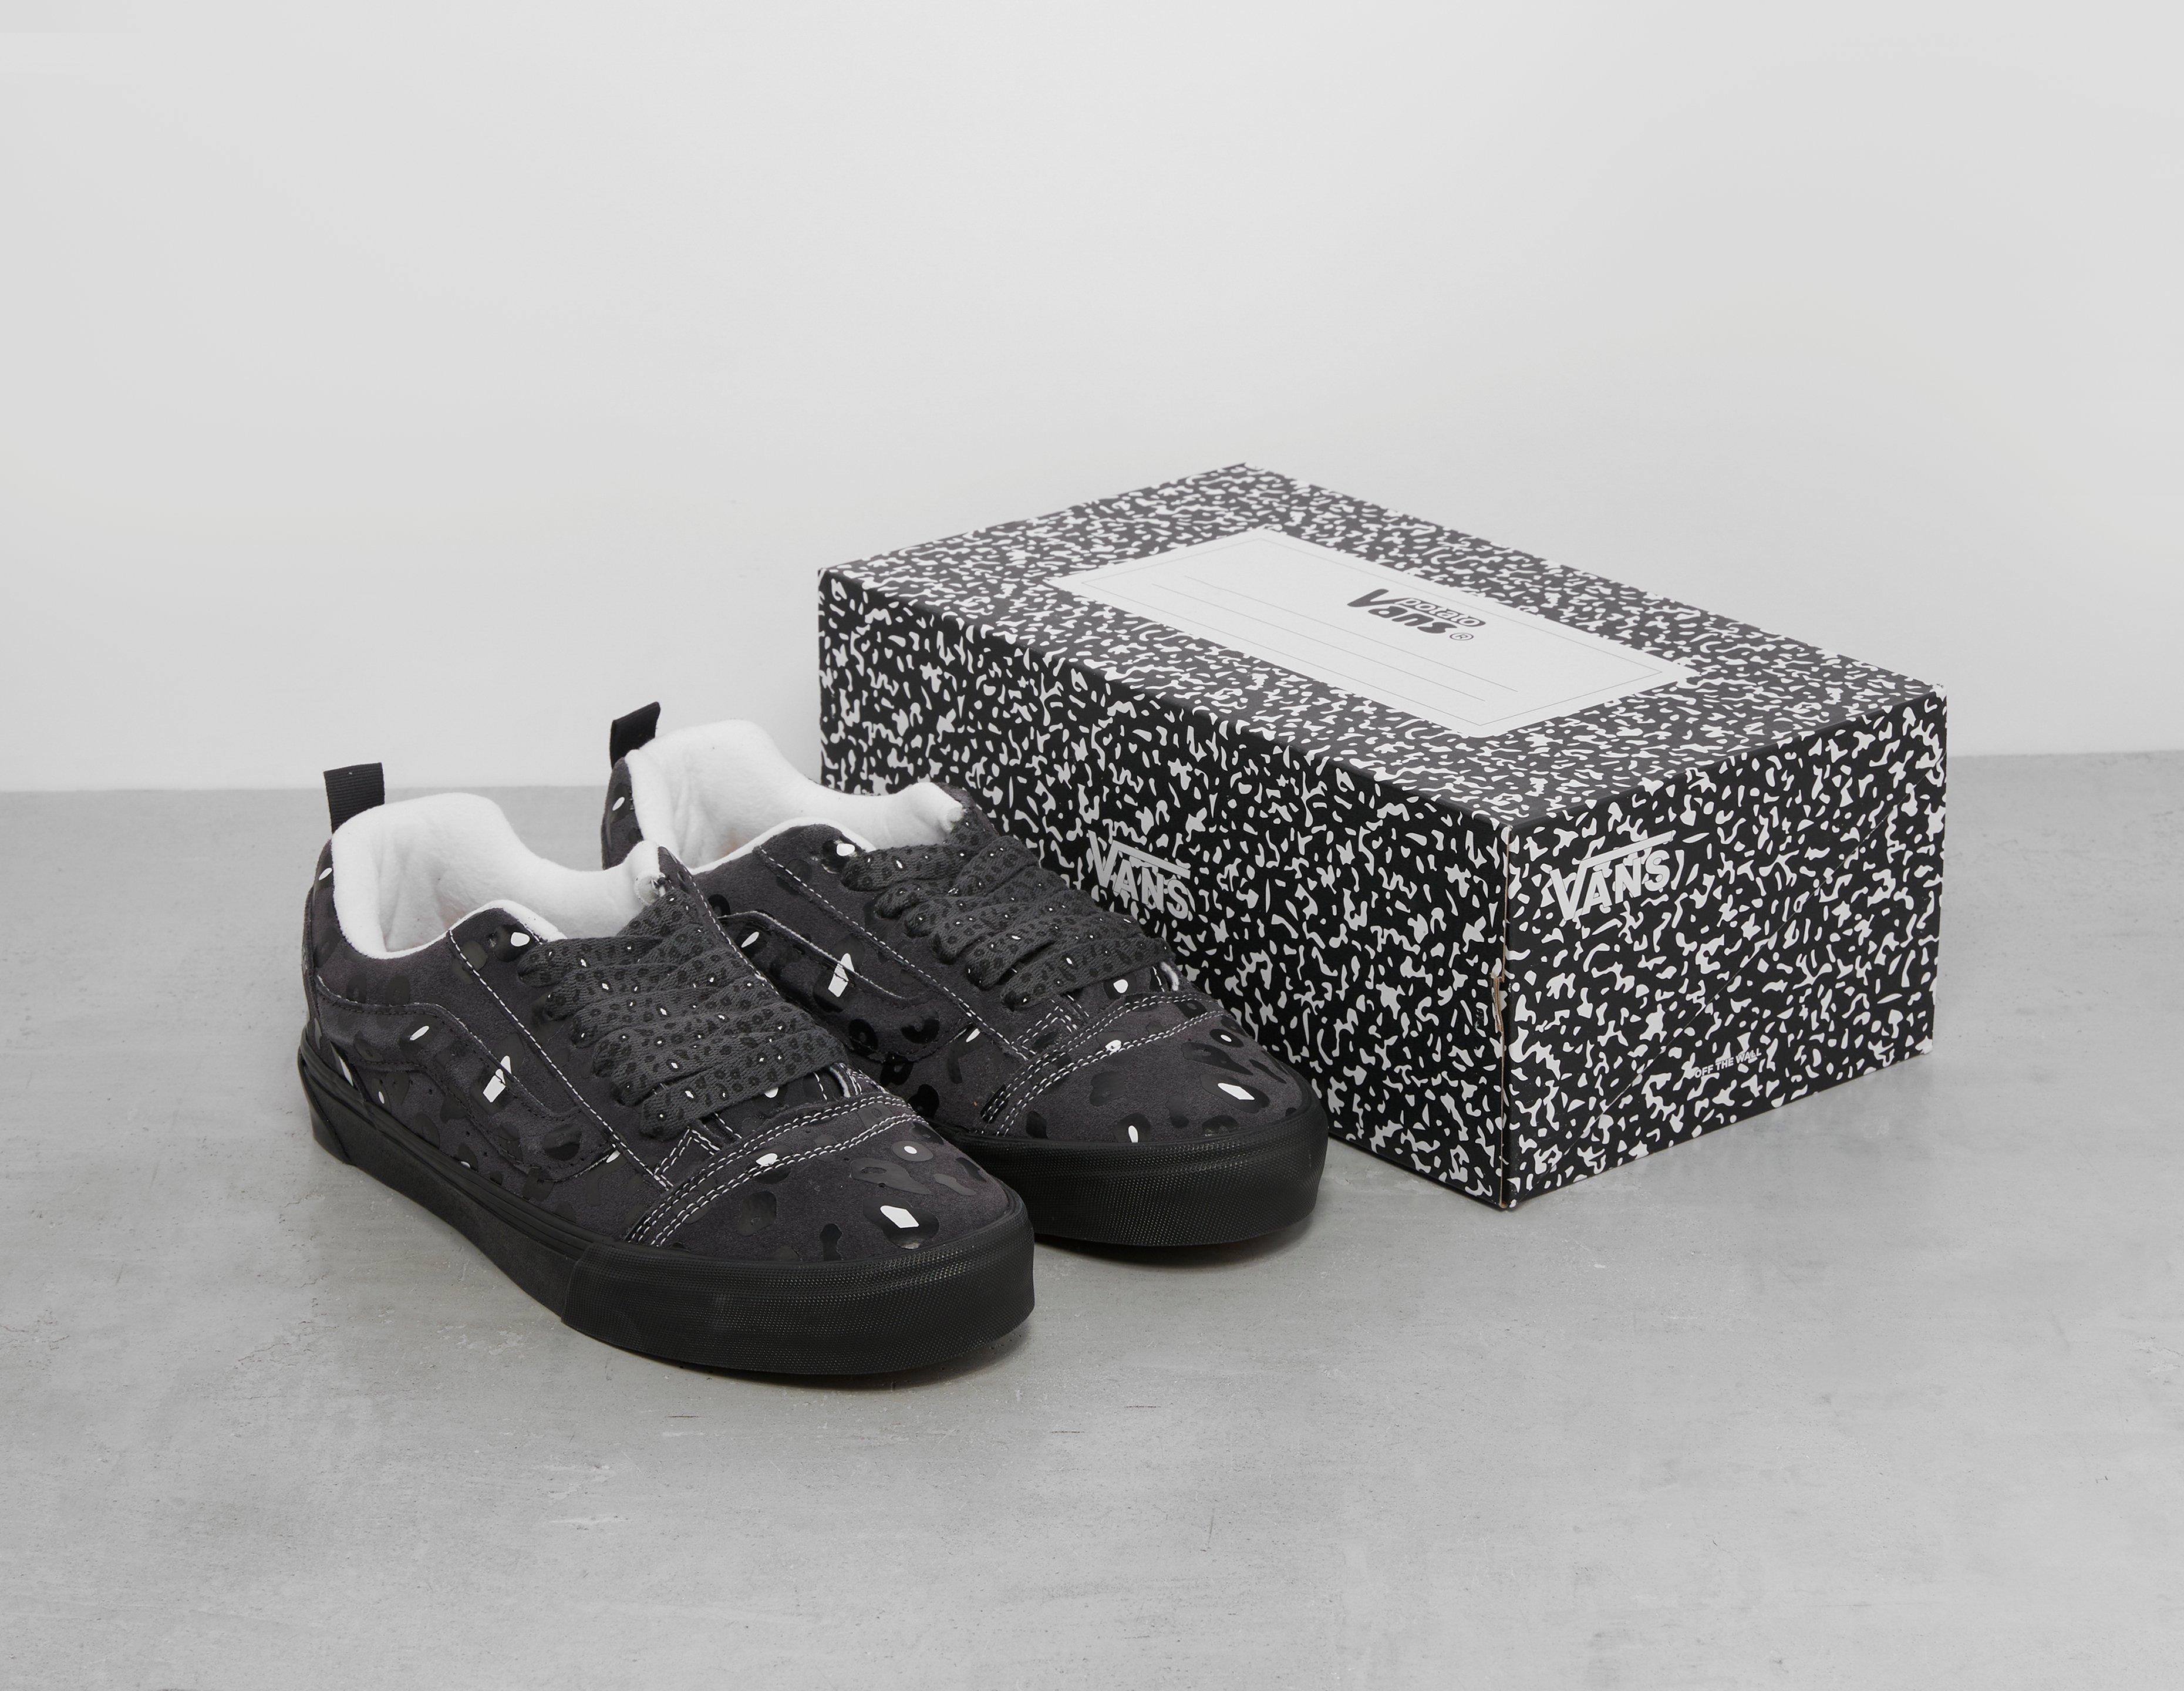 Vans Vault x Imran Potato UA Sk8-Hi VR3 LX Sneakers in Black/Navy/White, Size UK 8 | End Clothing